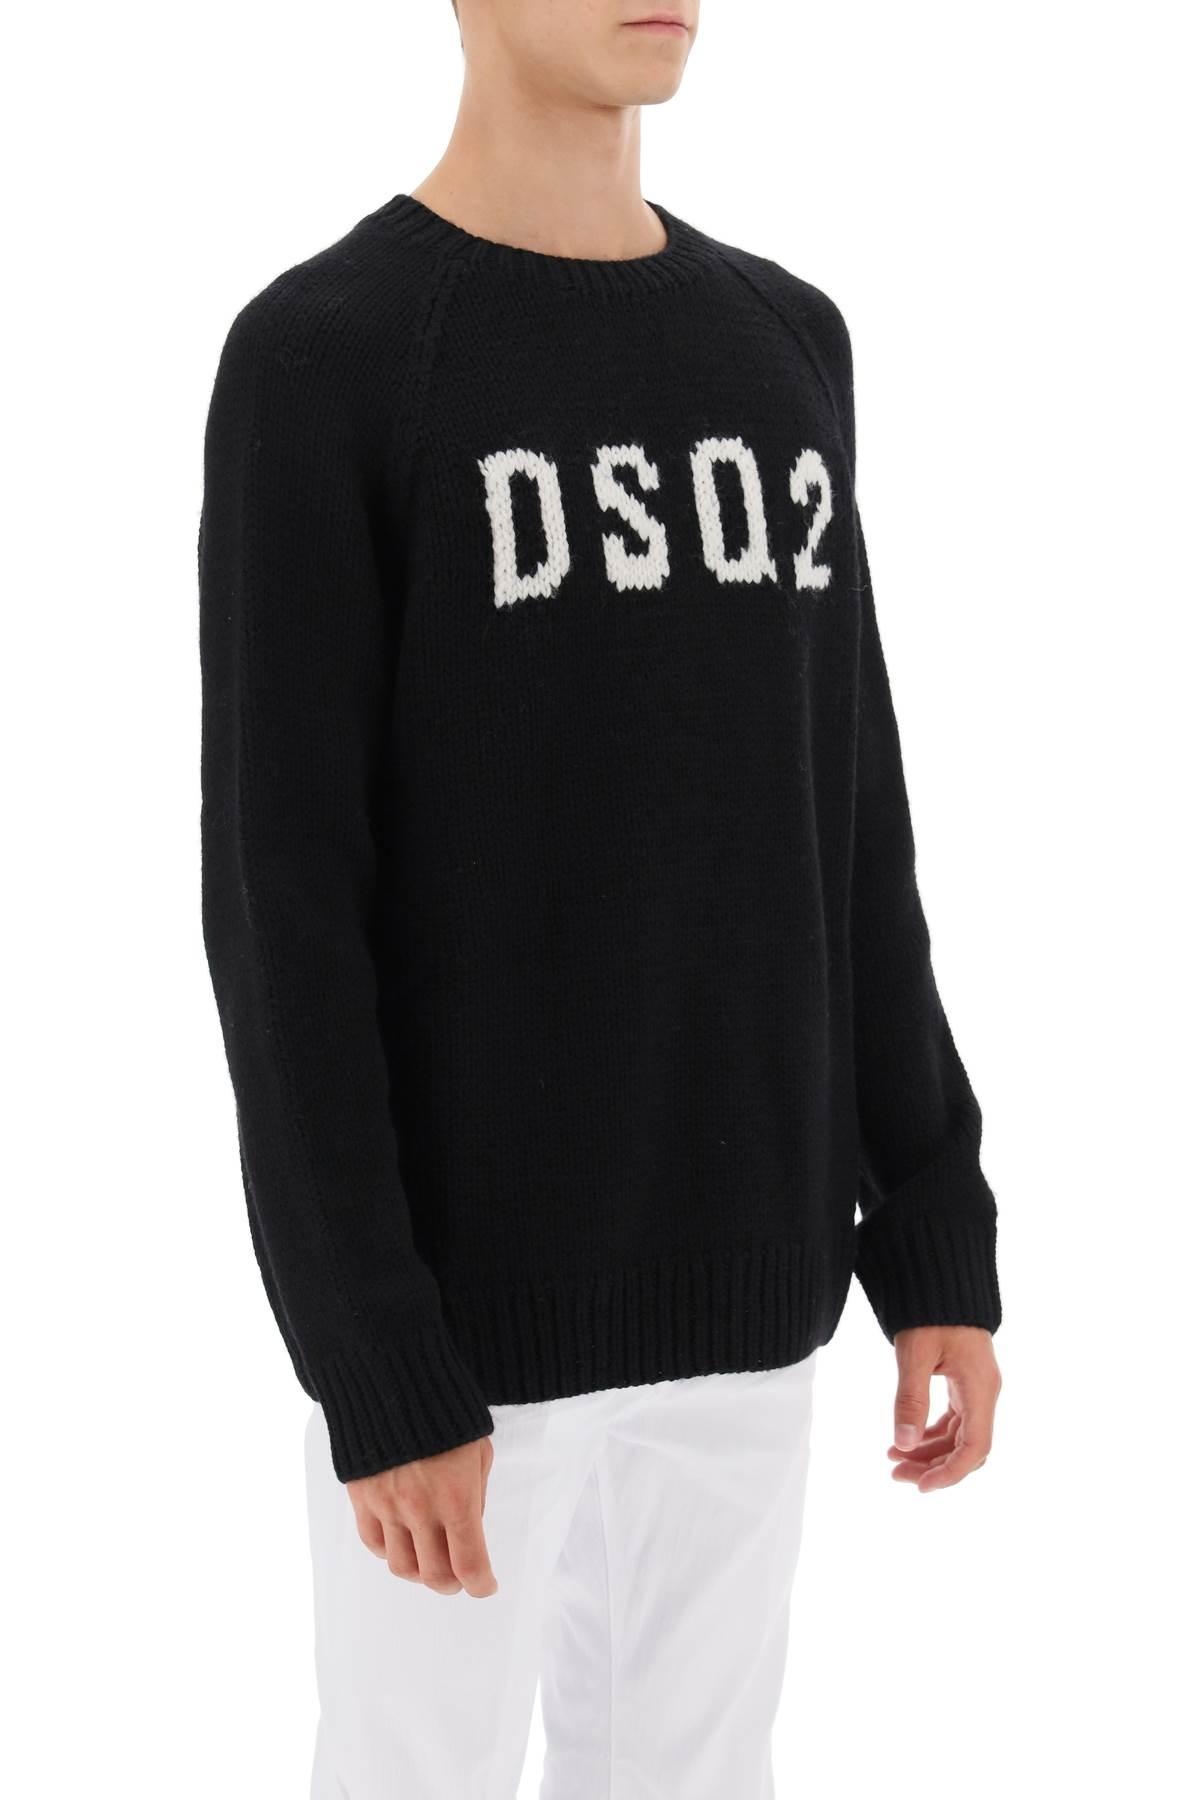 Dsquared2 Dsq2 Wool Sweater - 3